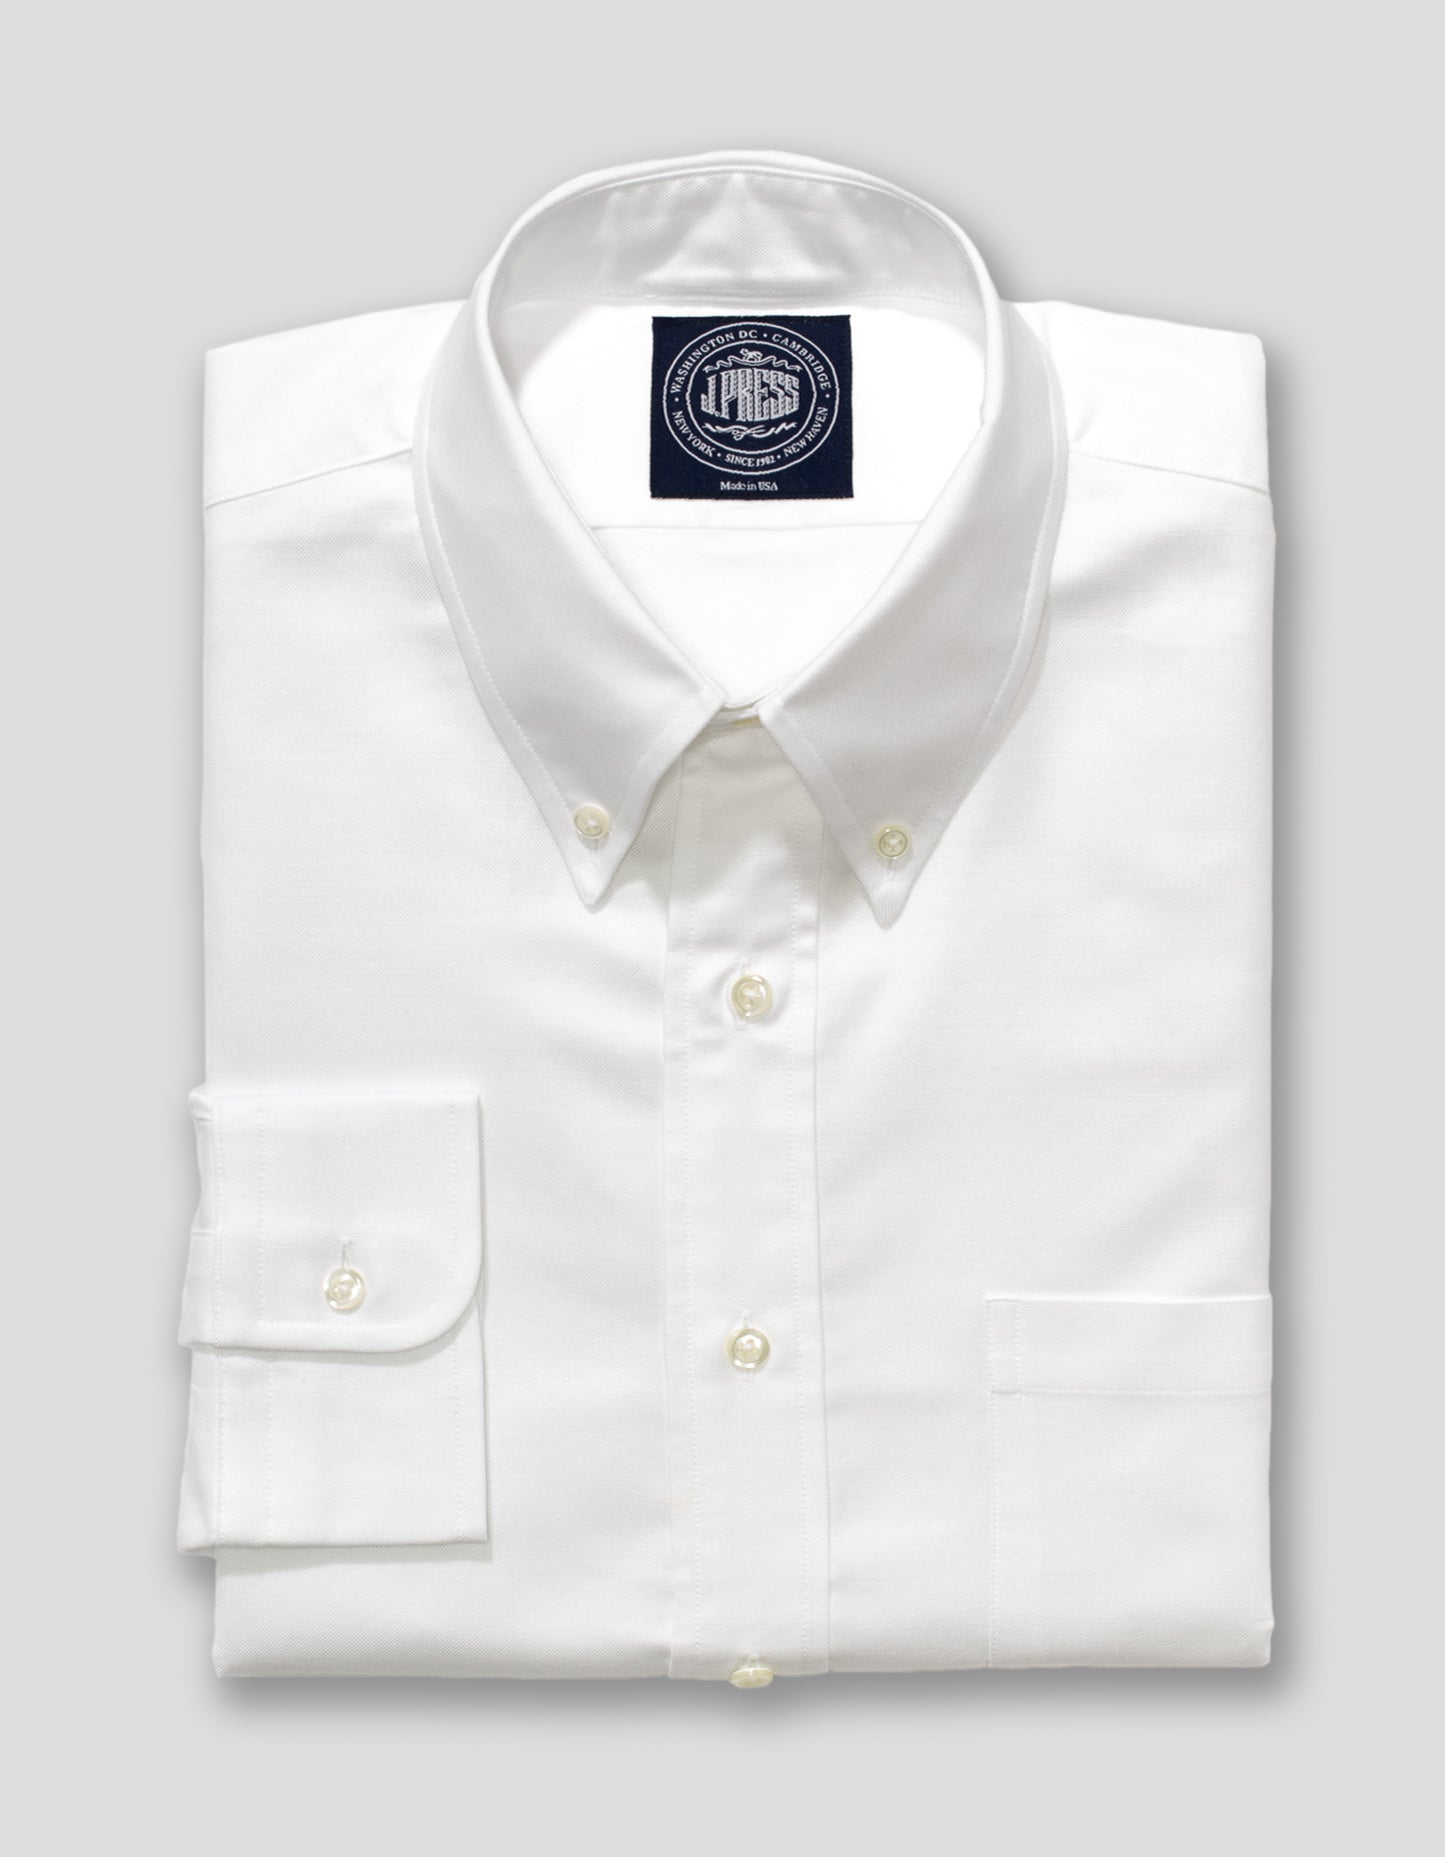 WHITE OXFORD DRESS SHIRT - TRIM FIT